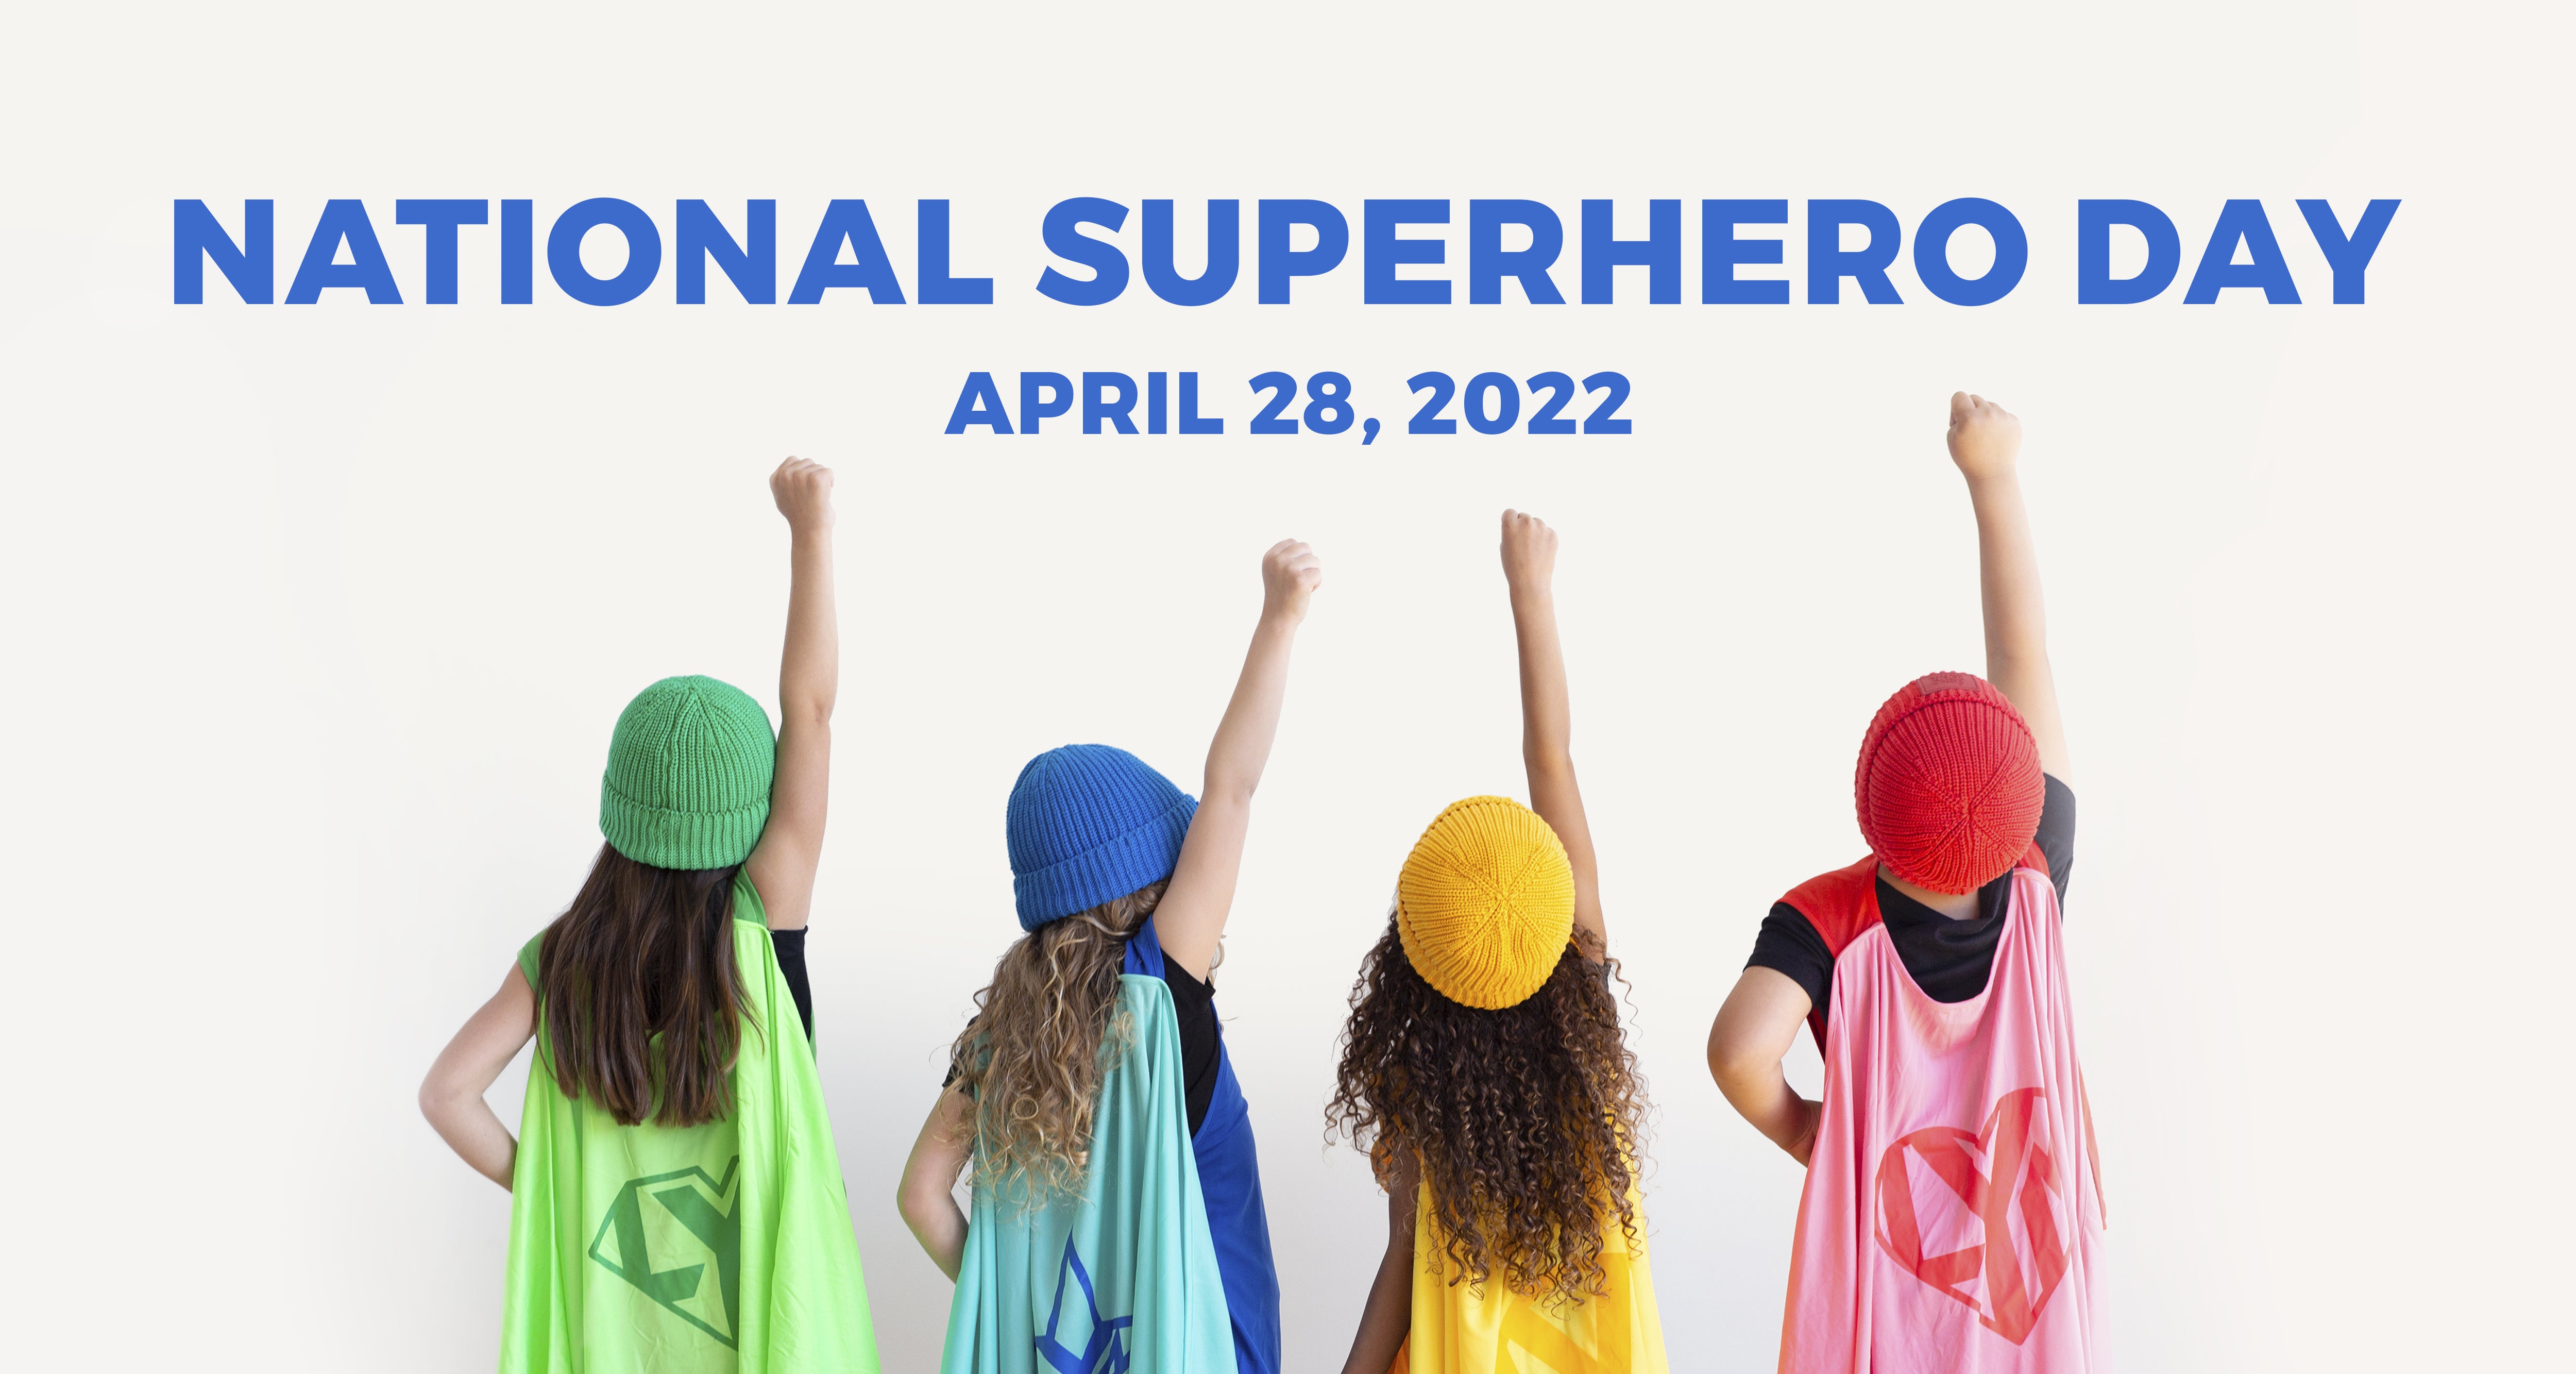 NATIONAL SUPERHERO DAY 2022